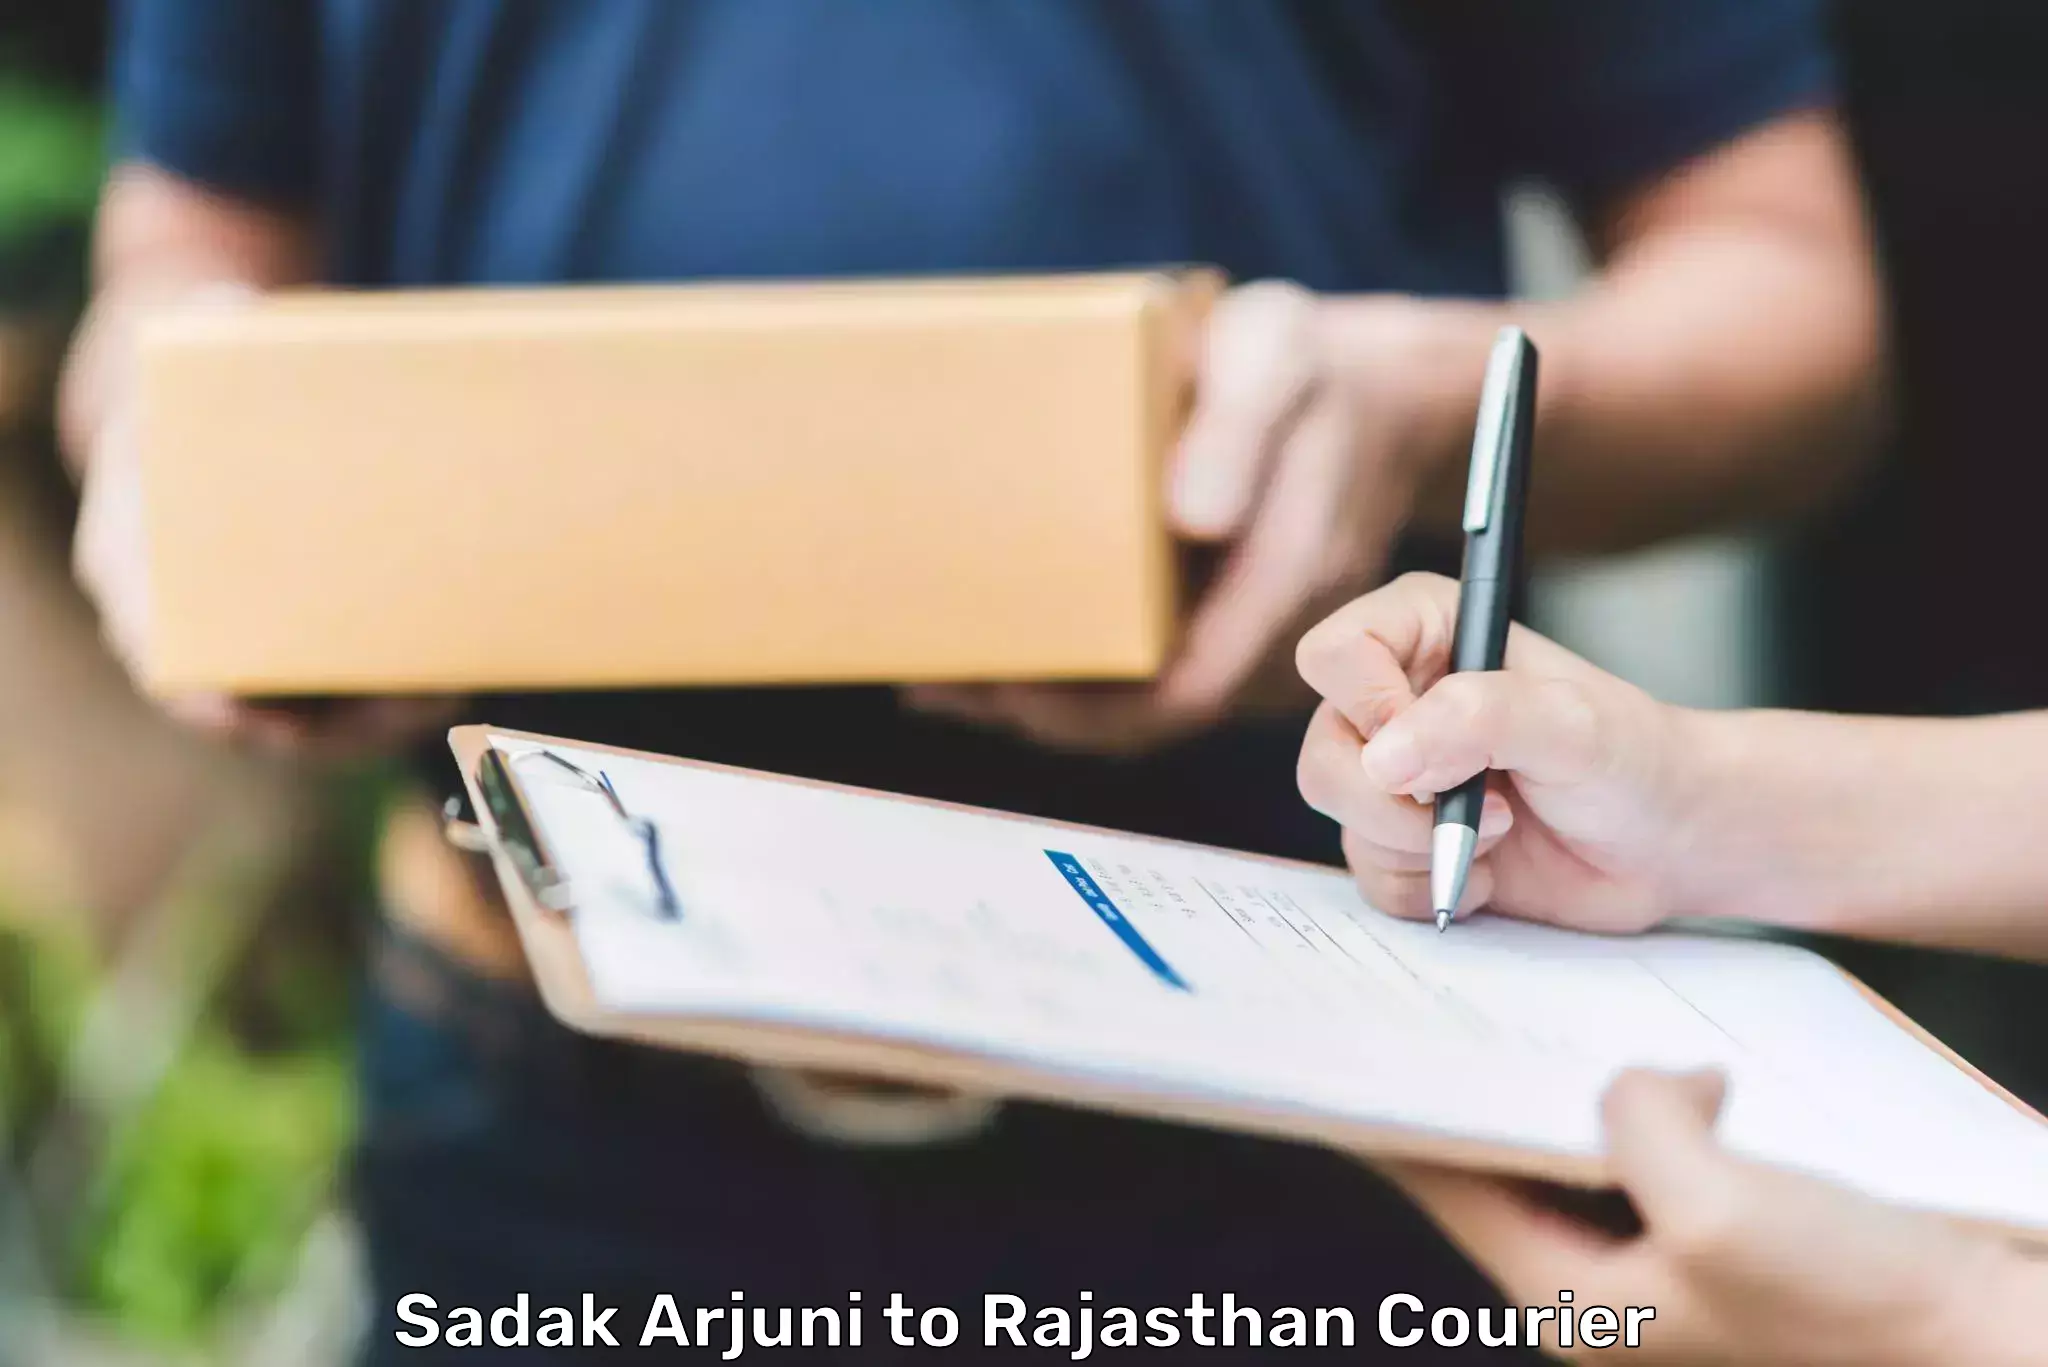 Courier service comparison Sadak Arjuni to Kota